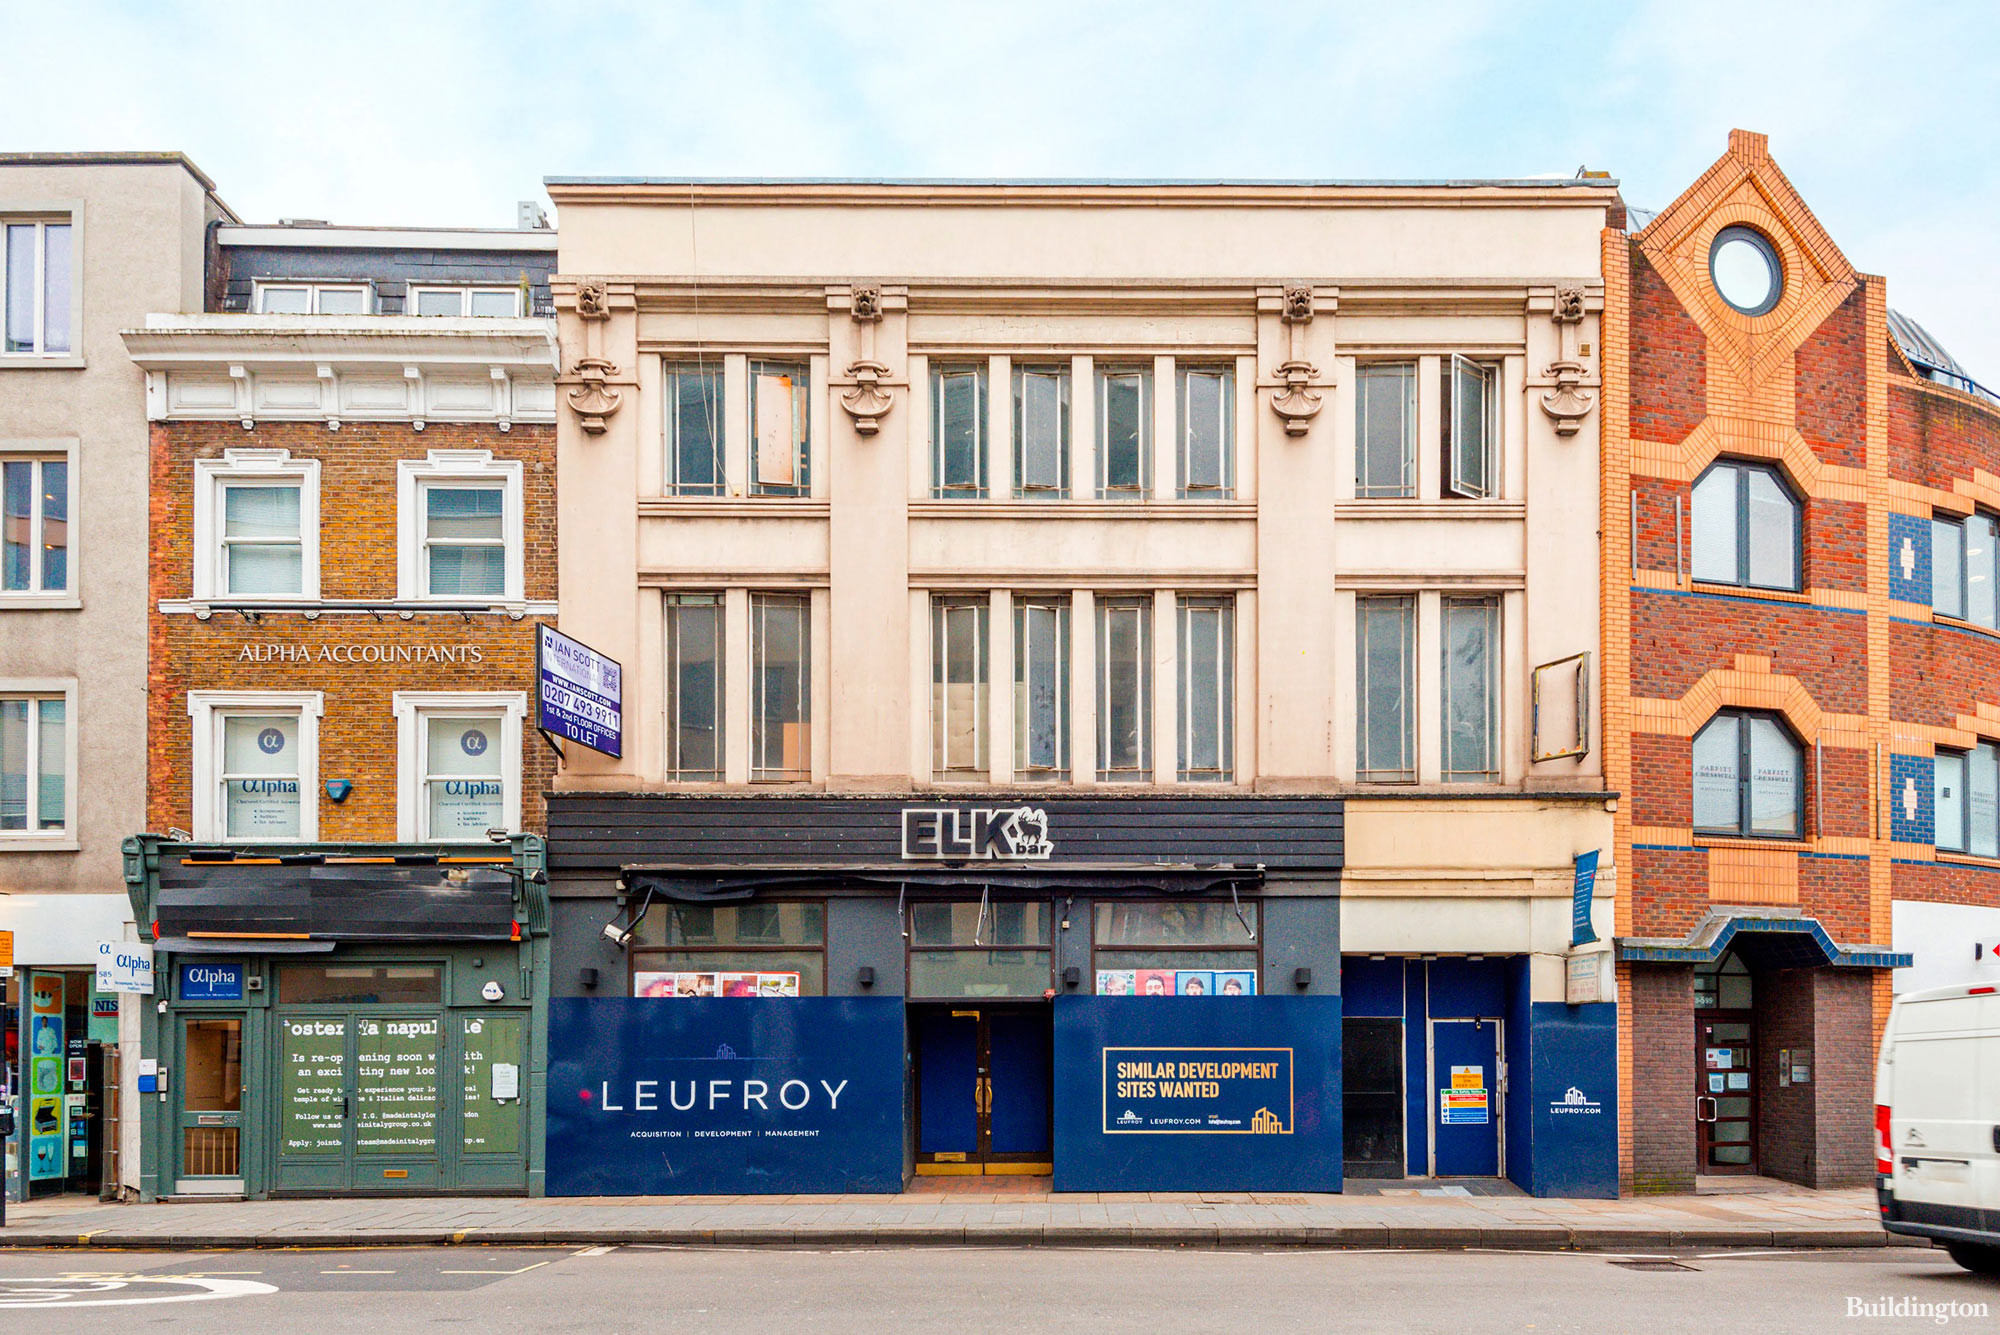 587-591 Fulham Road development by Leufroy in Fulham, London SW6.